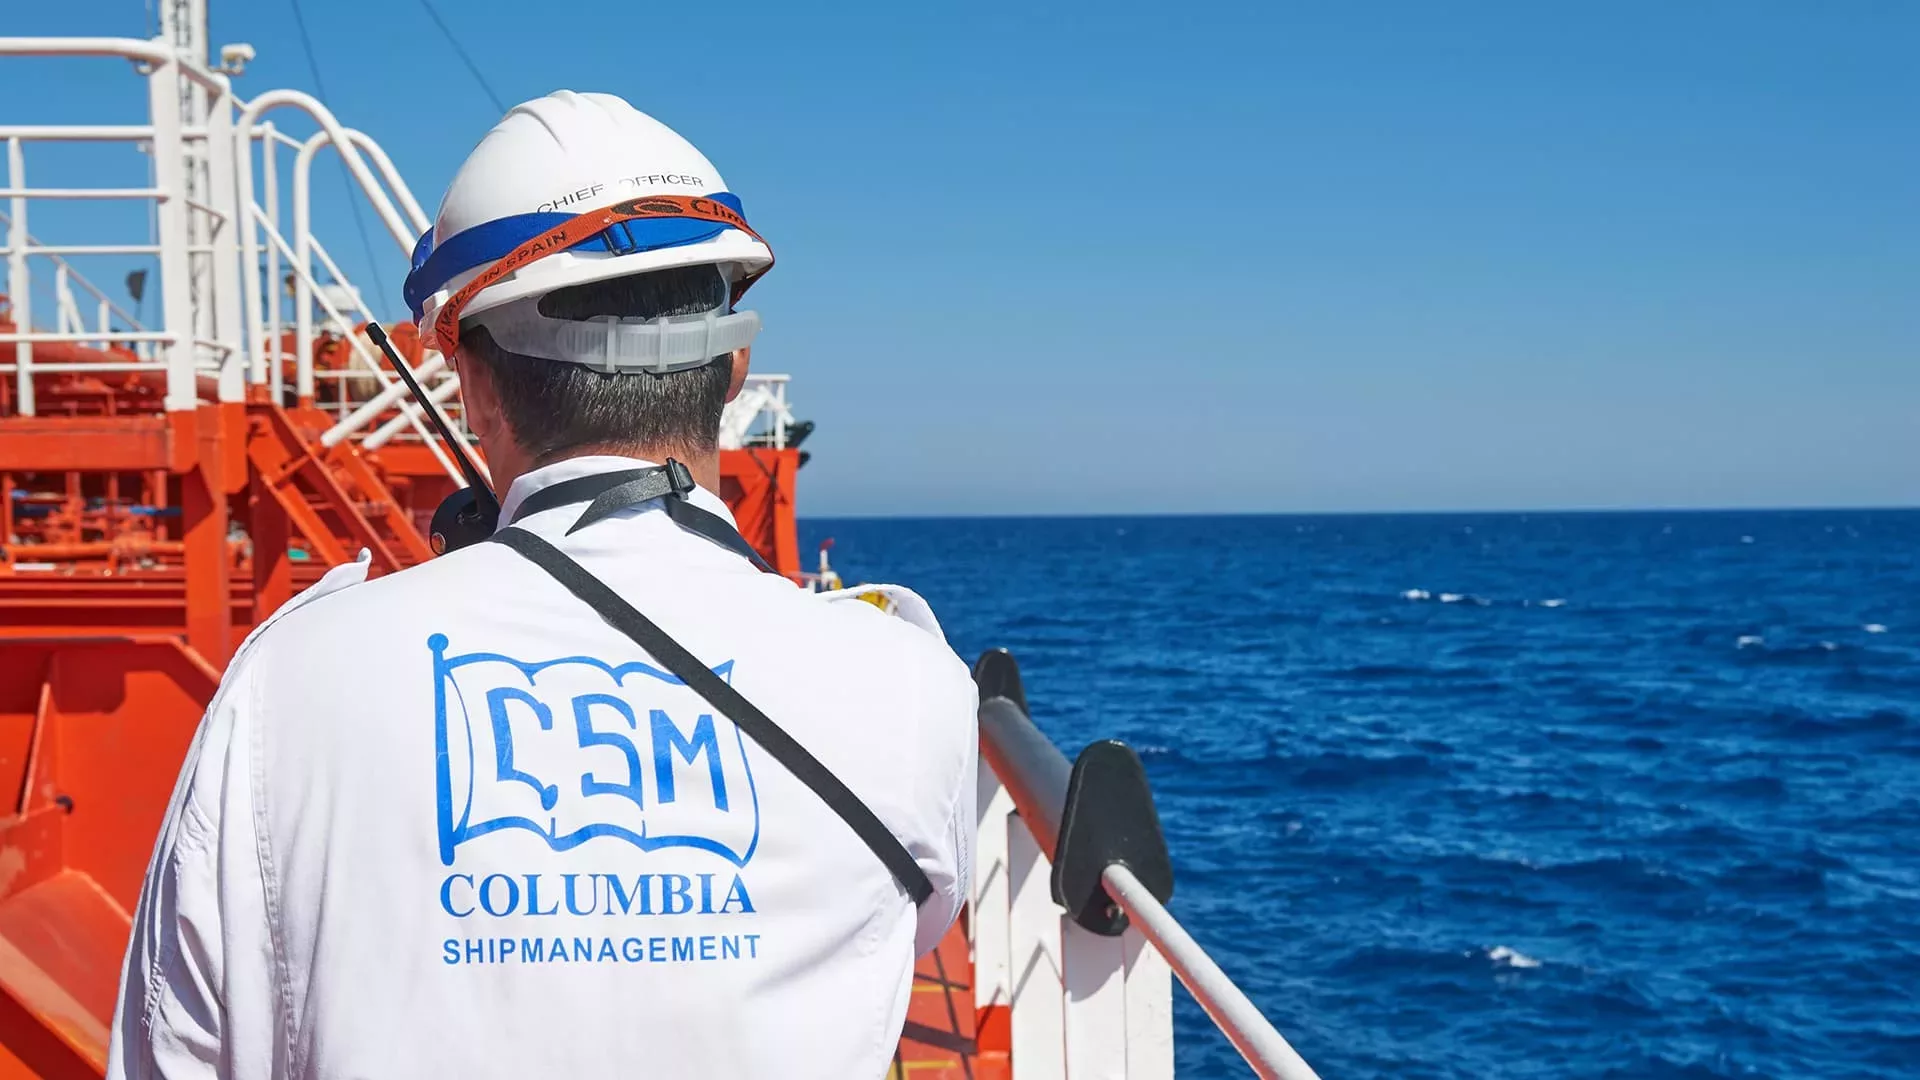 CSM Columbia crew shipmanagement